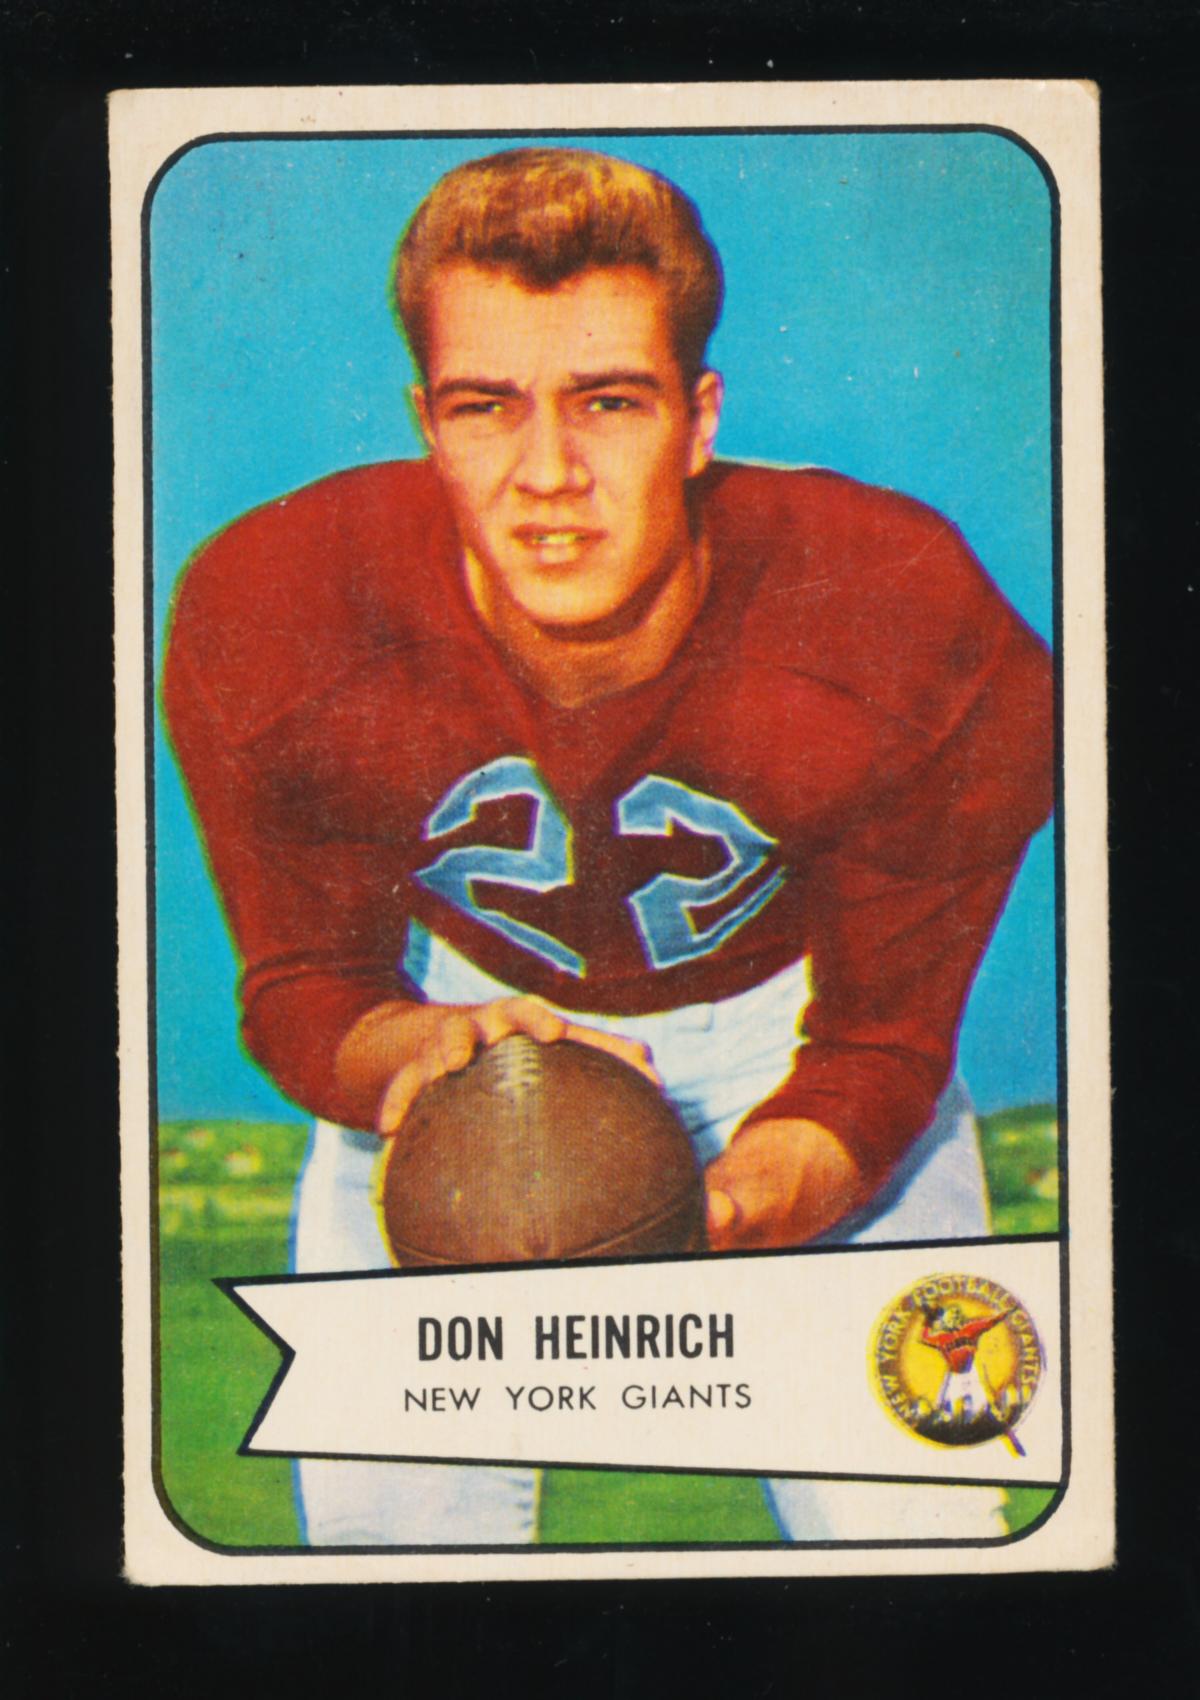 1954 Bowman ROOKIE Football Card #92 Rookie Don Heinrich New York Giants (S